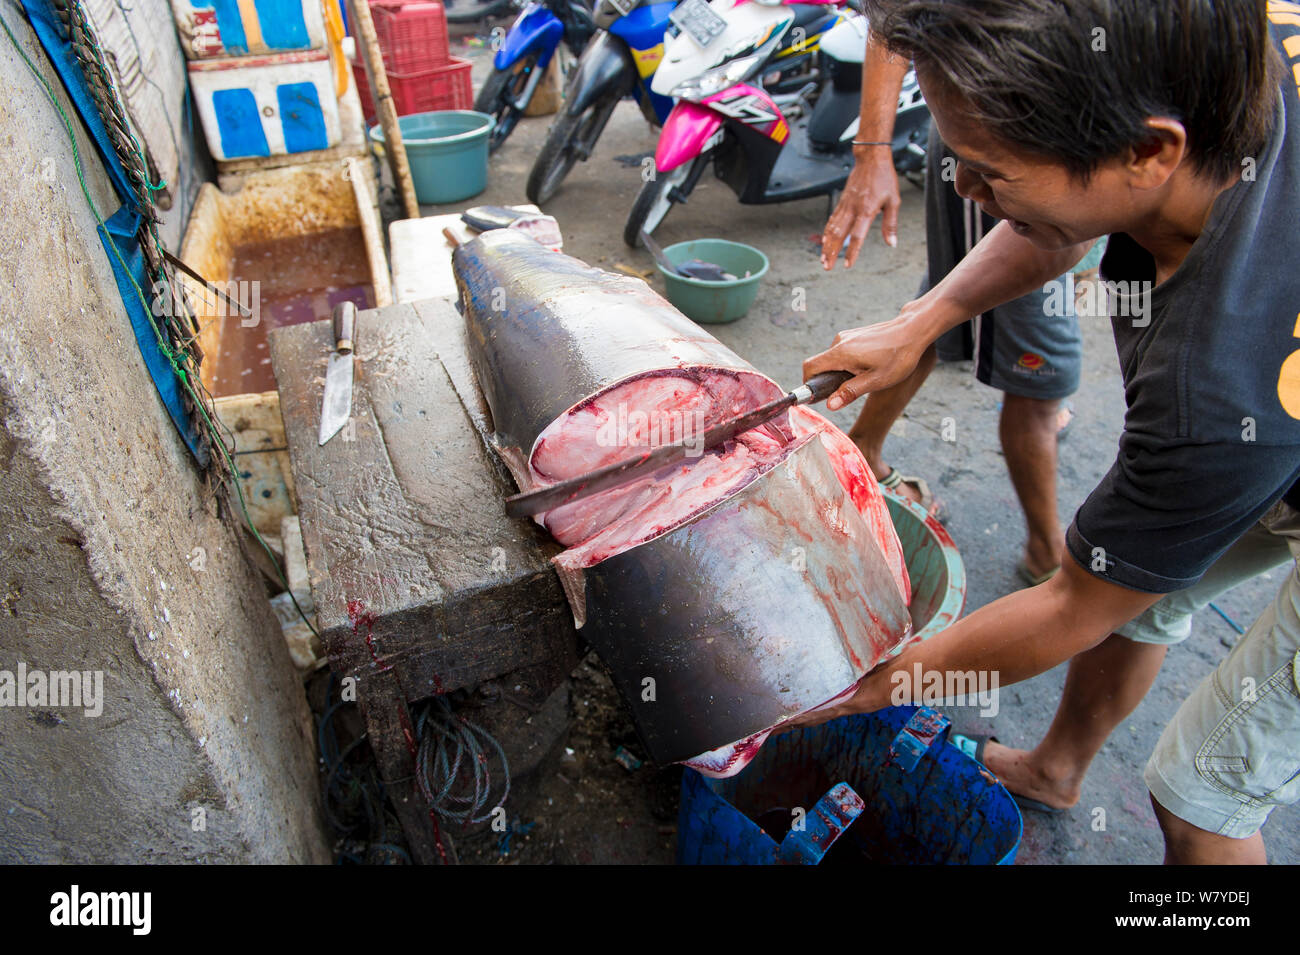 Man cutting up Mako shark (Isurus oxyrinchus) in fish market, Bali, Indonesia, August 2014. Vulnerable species. Stock Photo